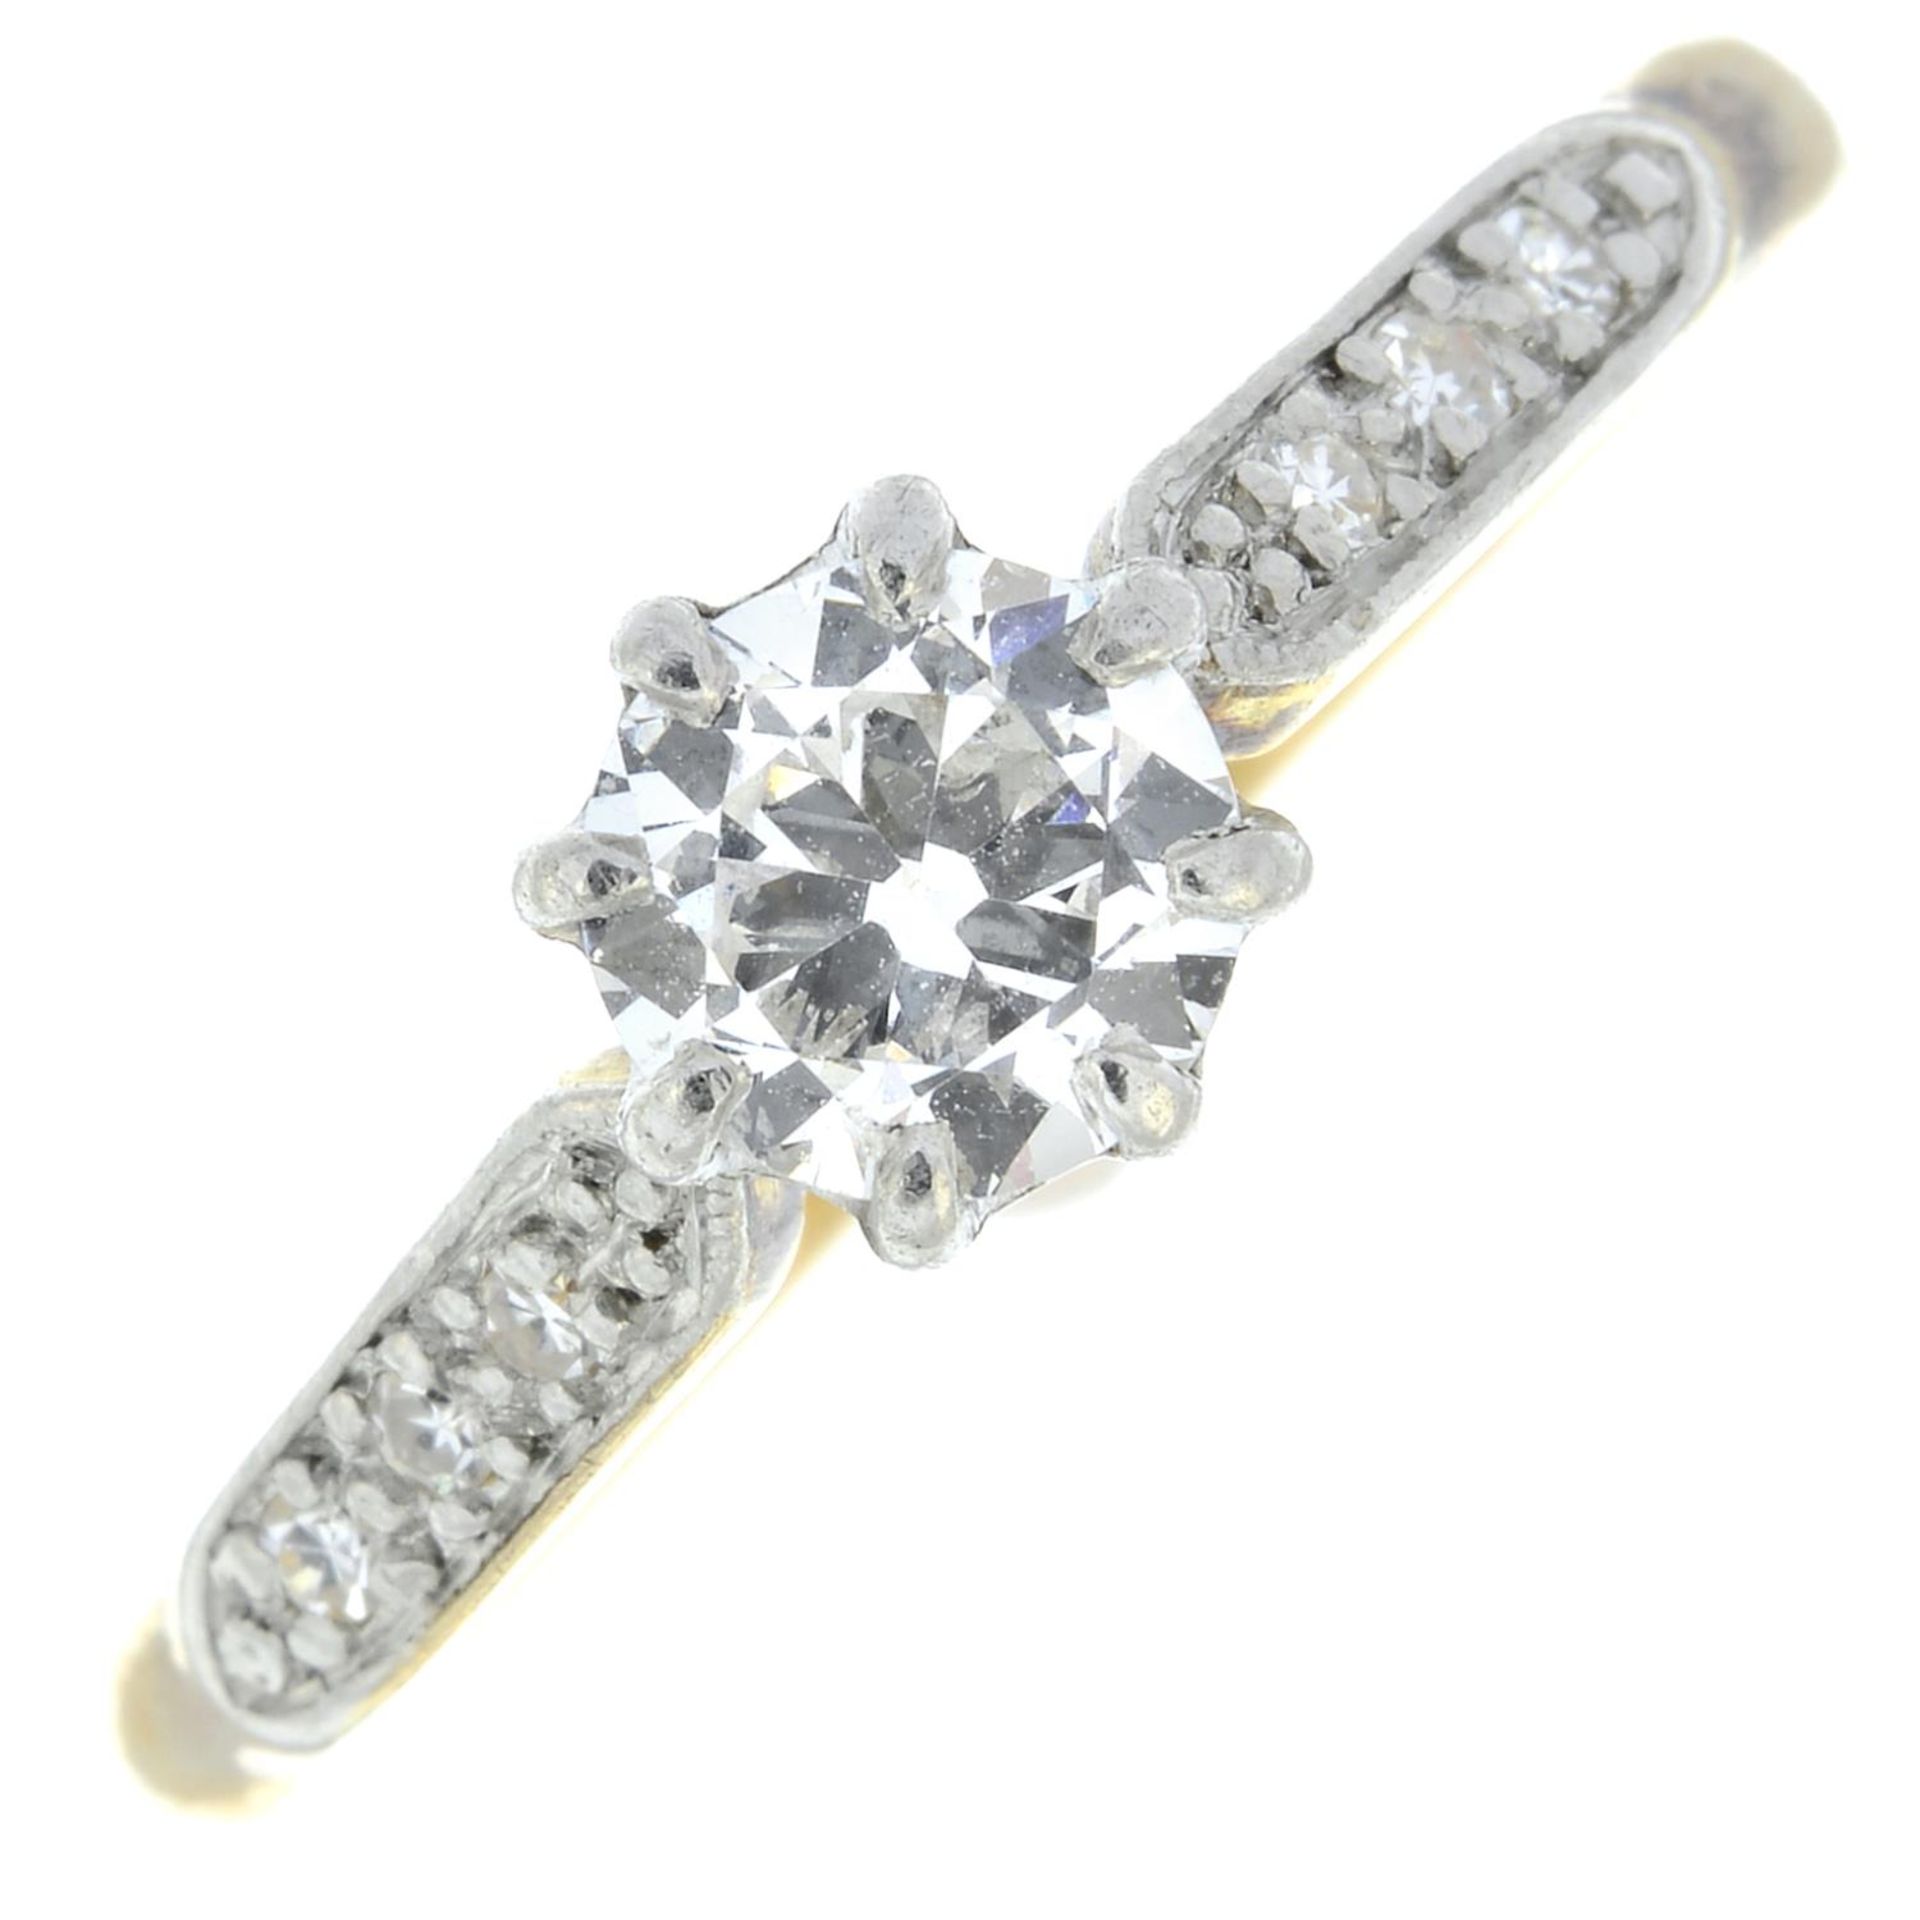 A mid 20th century18ct gold and platinum brilliant-cut diamond ring,